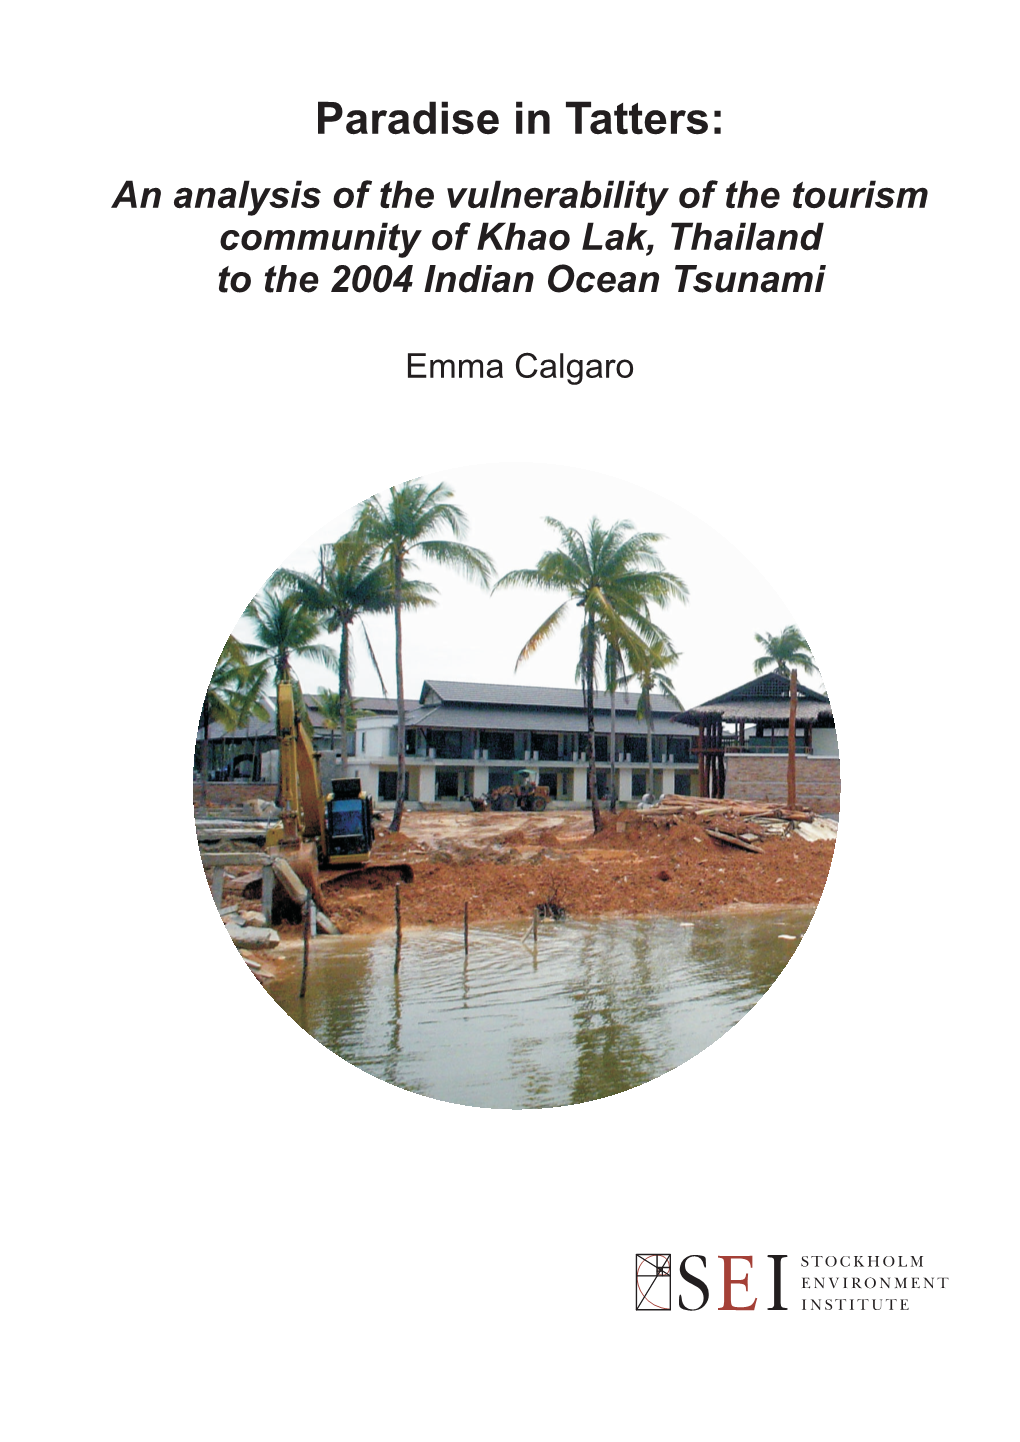 Vulnerability of Khao Lak to the 2004 Tsunami